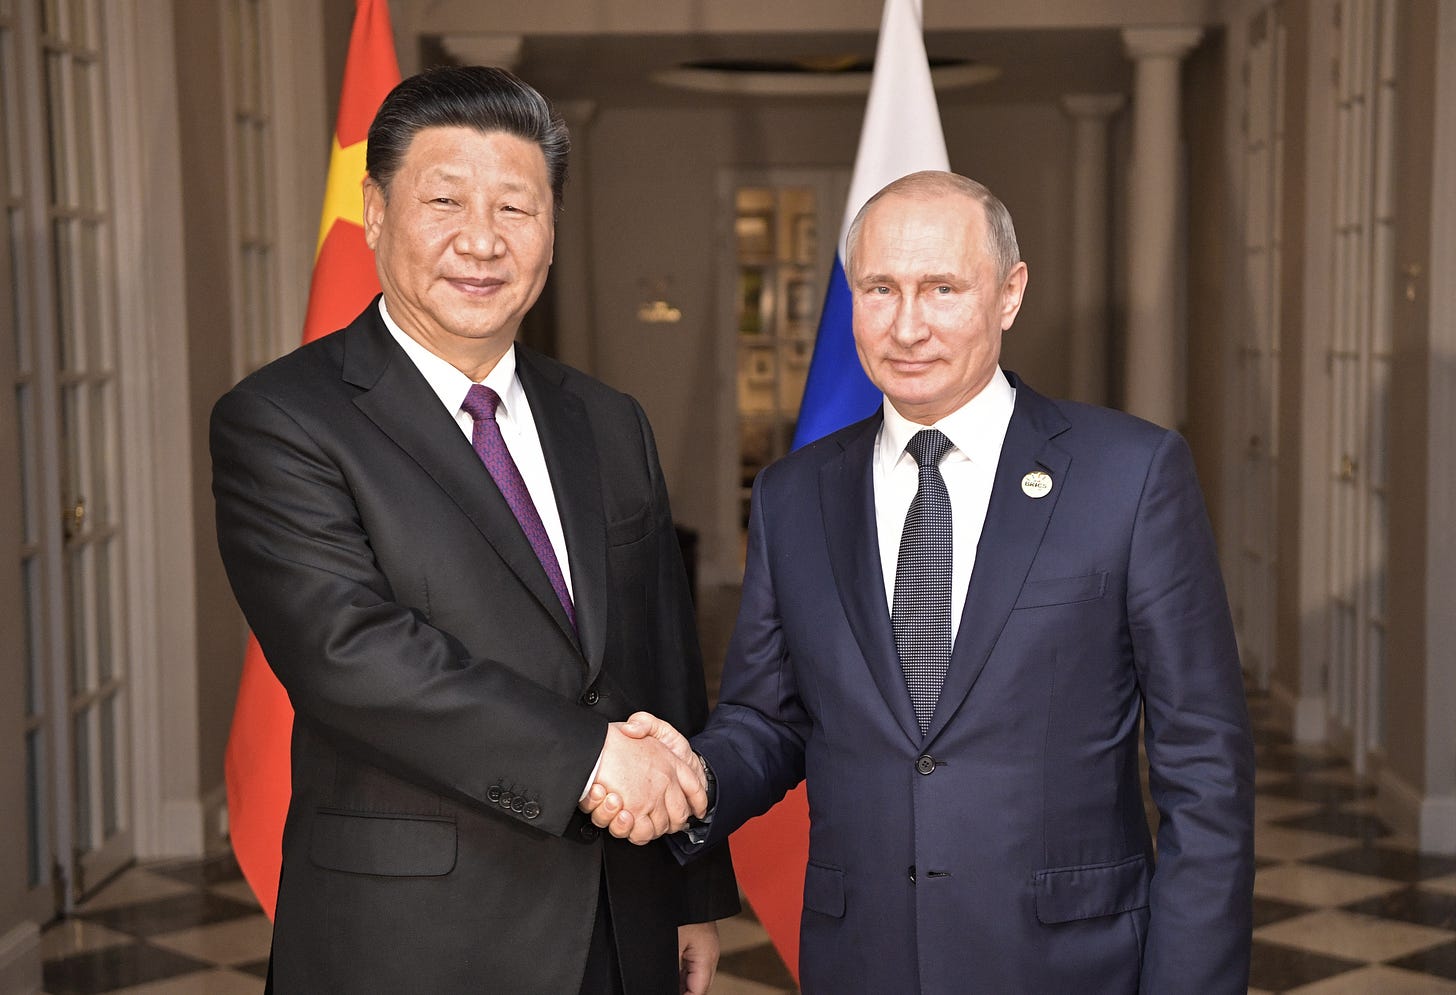 "File:Vladimir Putin and Xi Jinping, 26 july 2018 (1).jpg" by Пресс-служба Президента Российской Федерации is marked with CC BY 4.0.